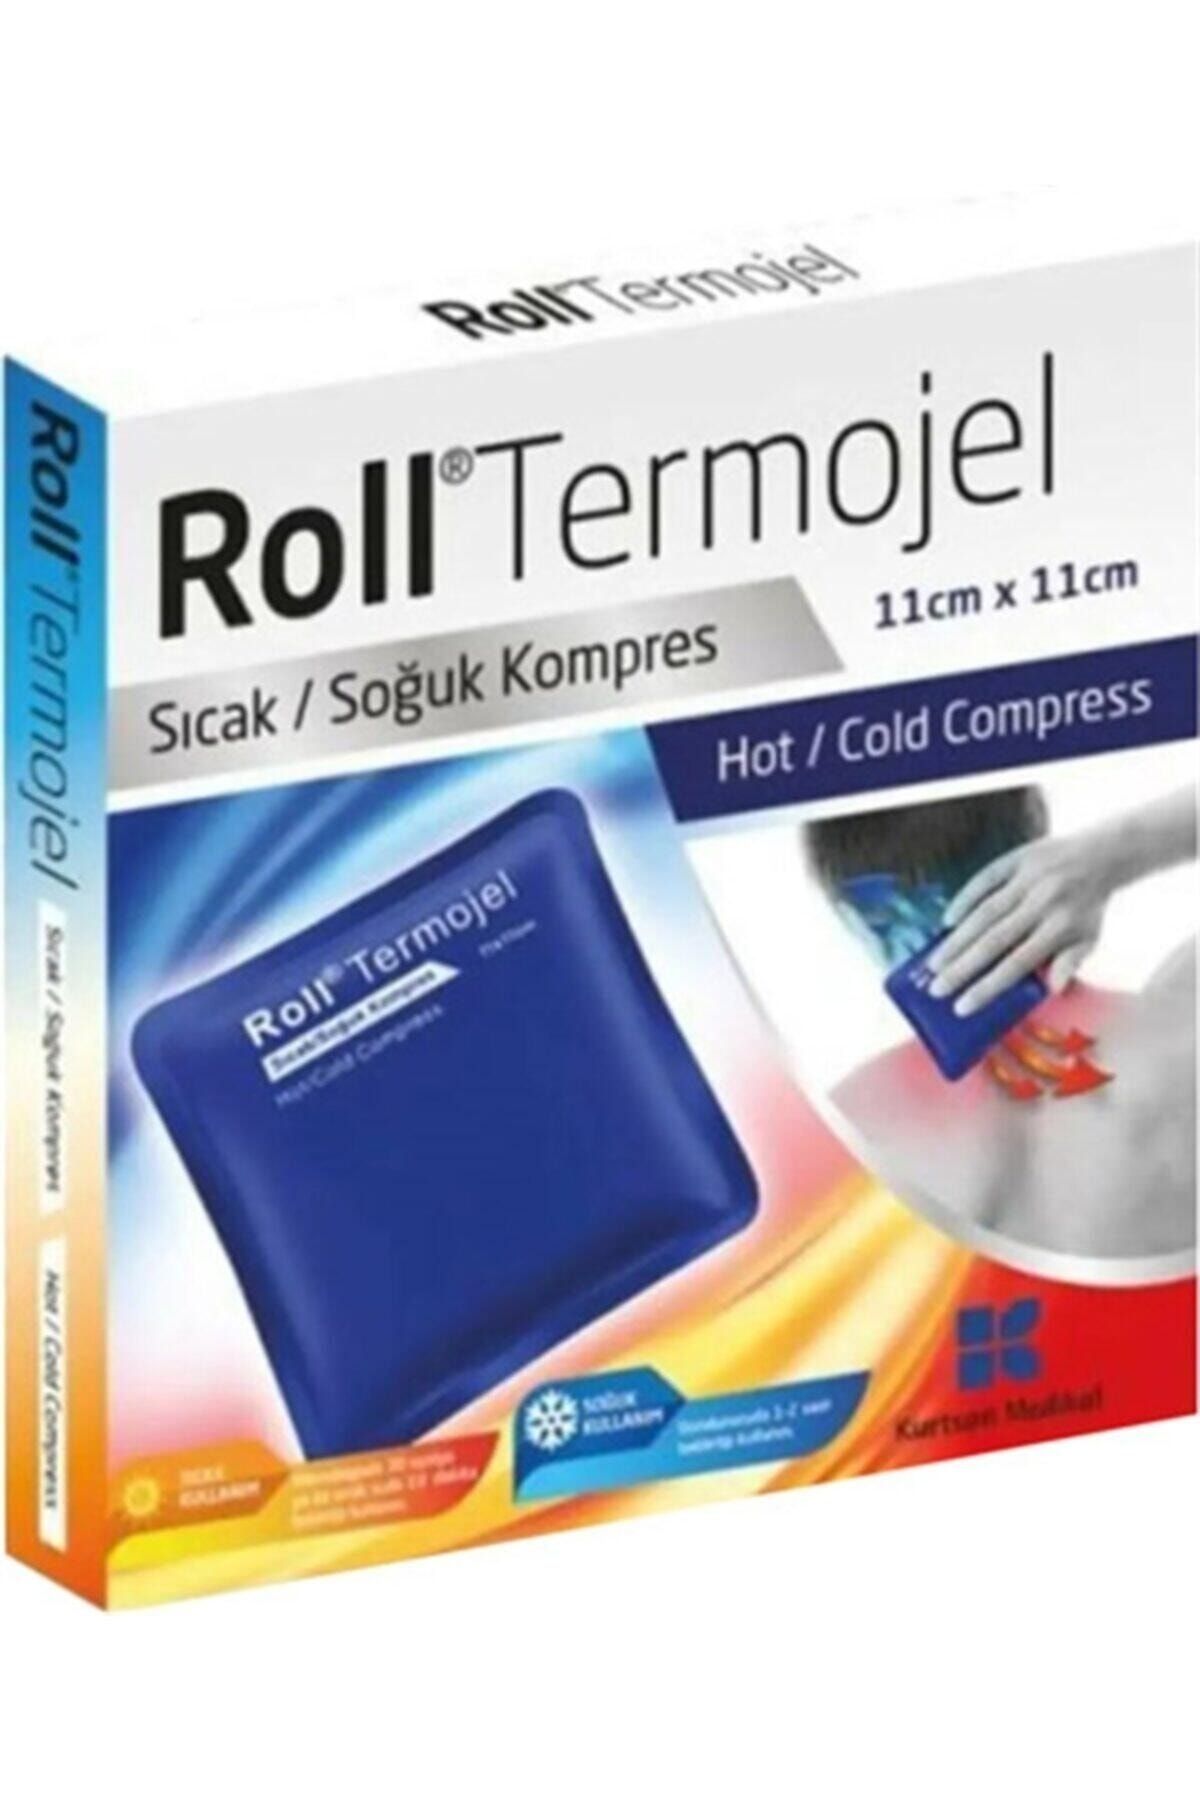 Roll Termojel Sıcak Soğuk Kompres 11x11 termofor Kompress